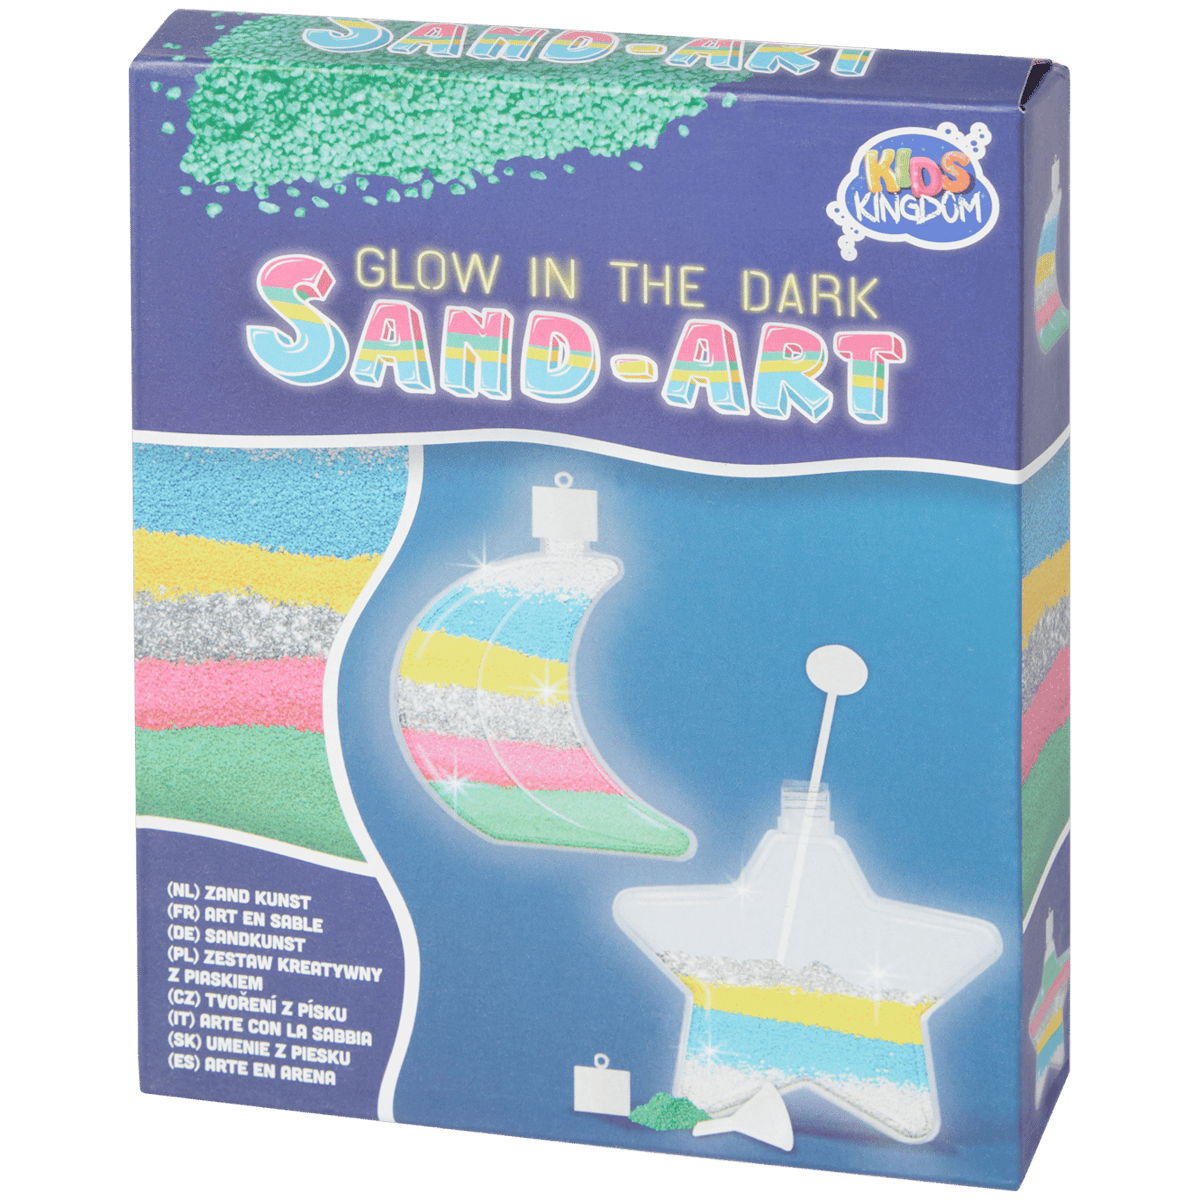 Glow-in-the-dark zandkunst